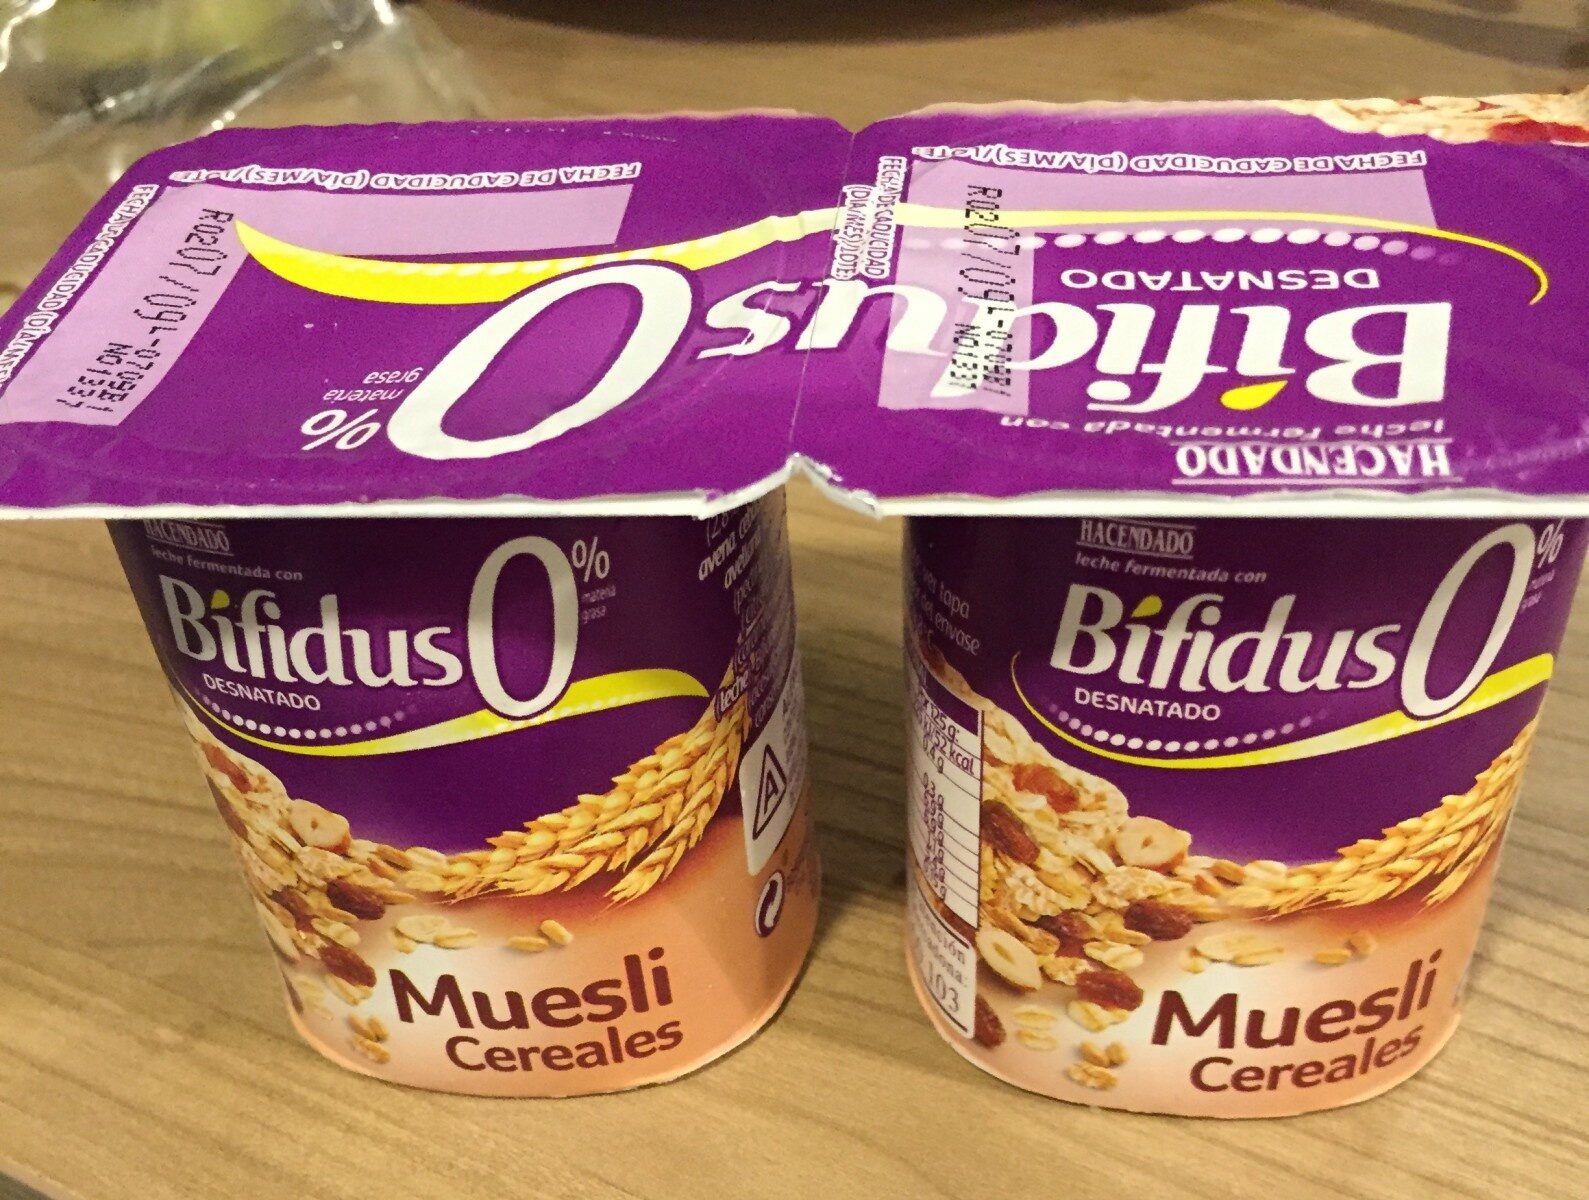 Bifidus 0% muesli cereales - Producto